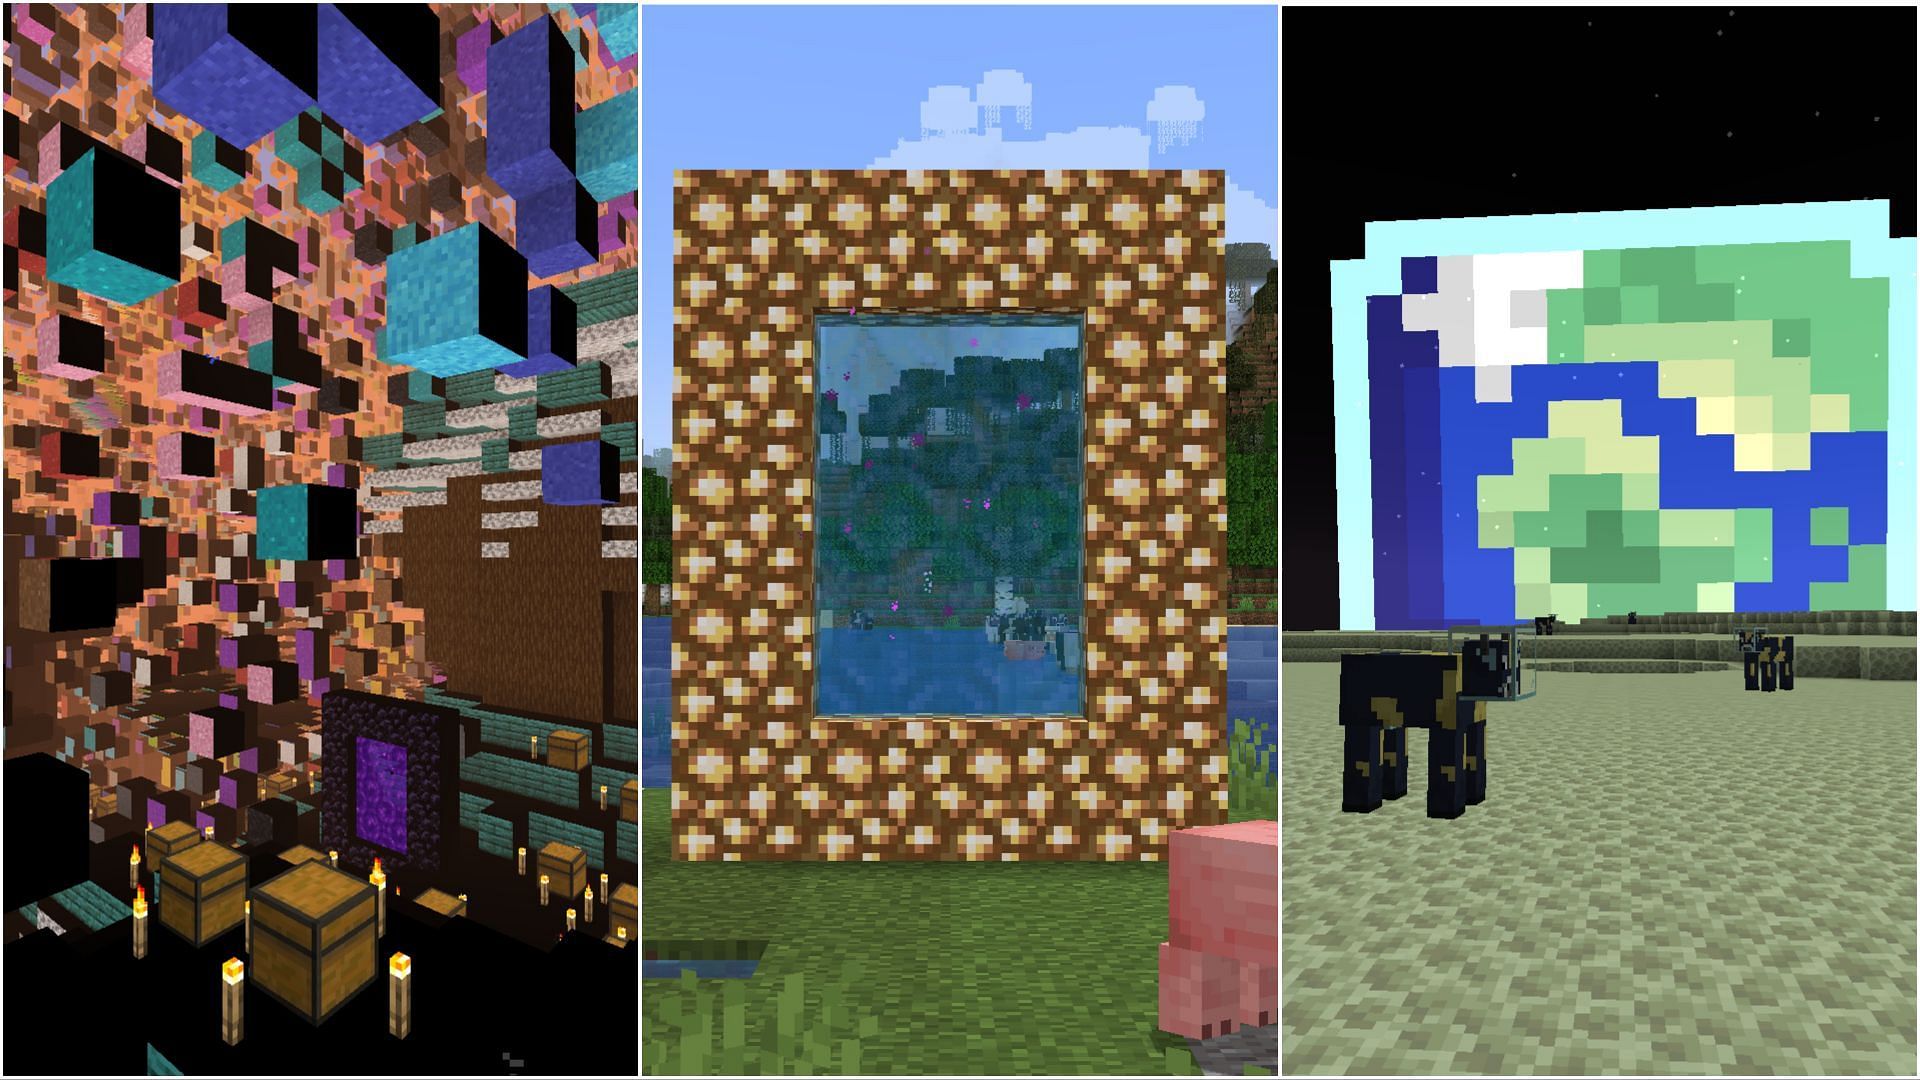 Minecraft 2.0 Download - April Fools Update 